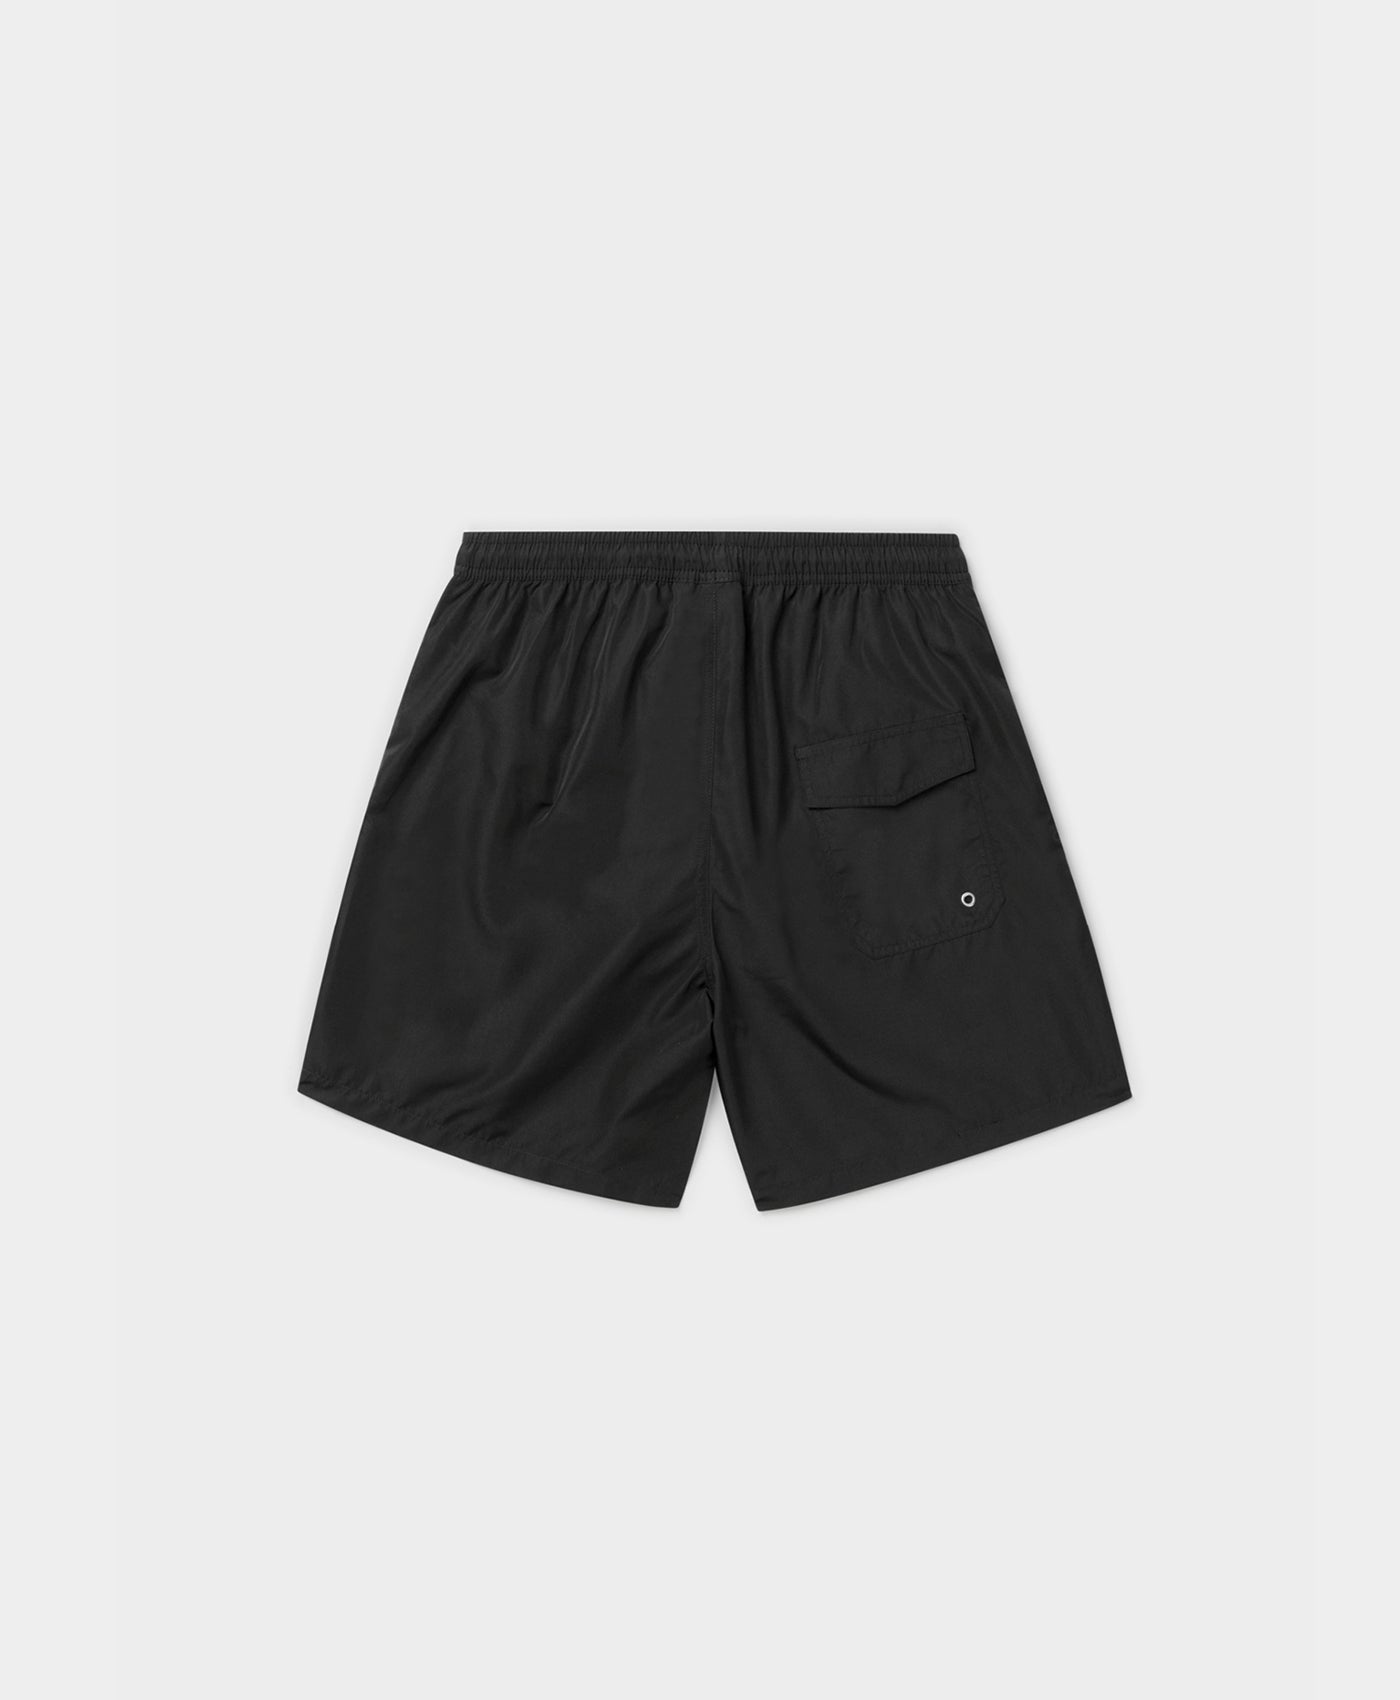 DP - Black Etype Swim Shorts - Packshot - Rear